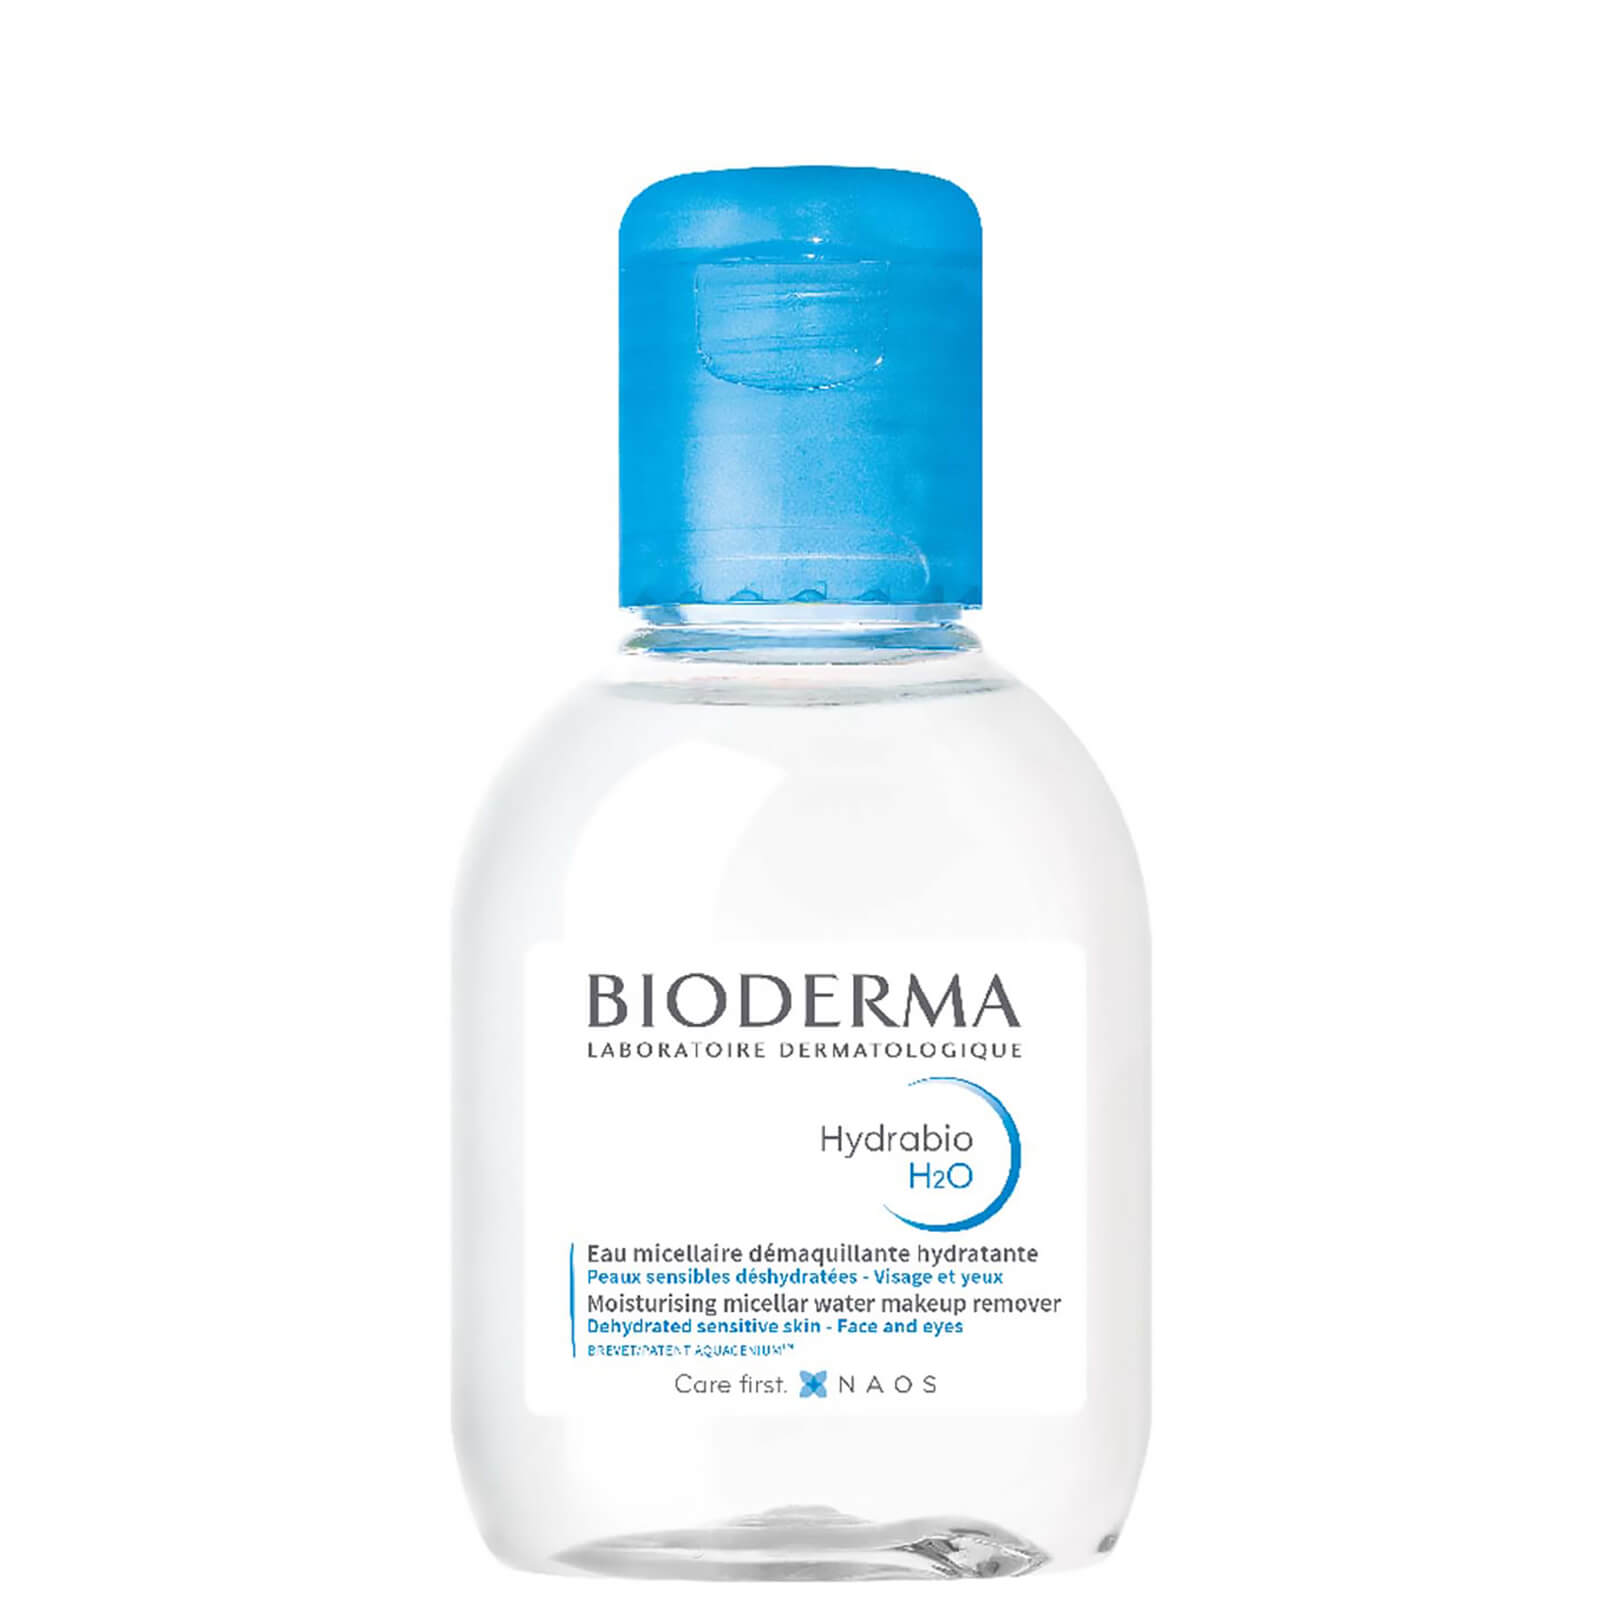 BIODERMA Hydrabio H2O Hydrating Micellar Water Cleanser for Dehydrated Skin 100ml